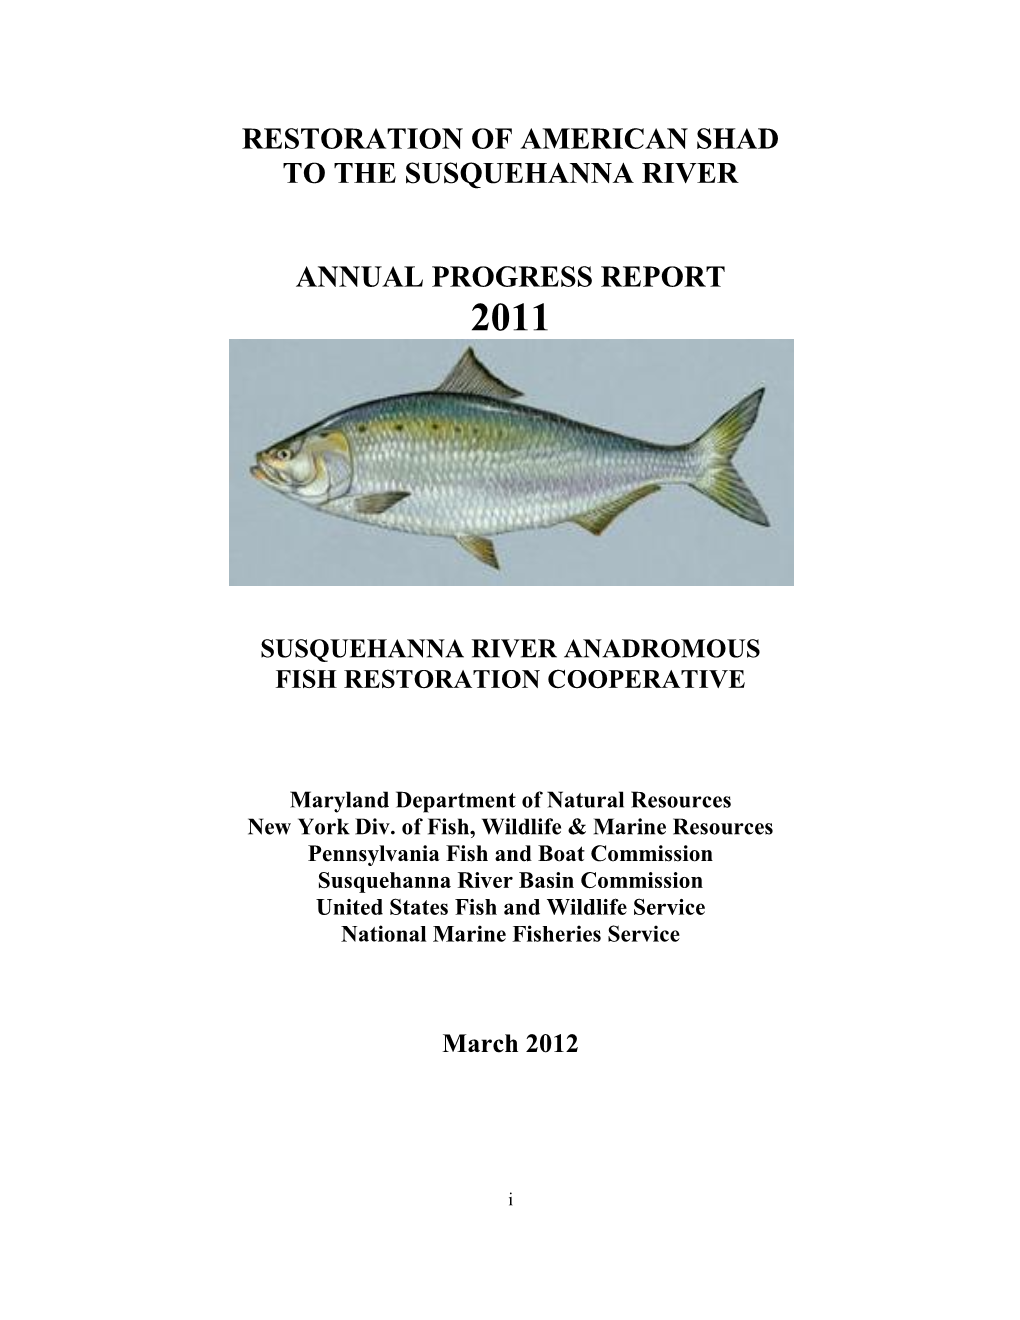 Restoration of American Shad to the Susquehanna River Annual Progress